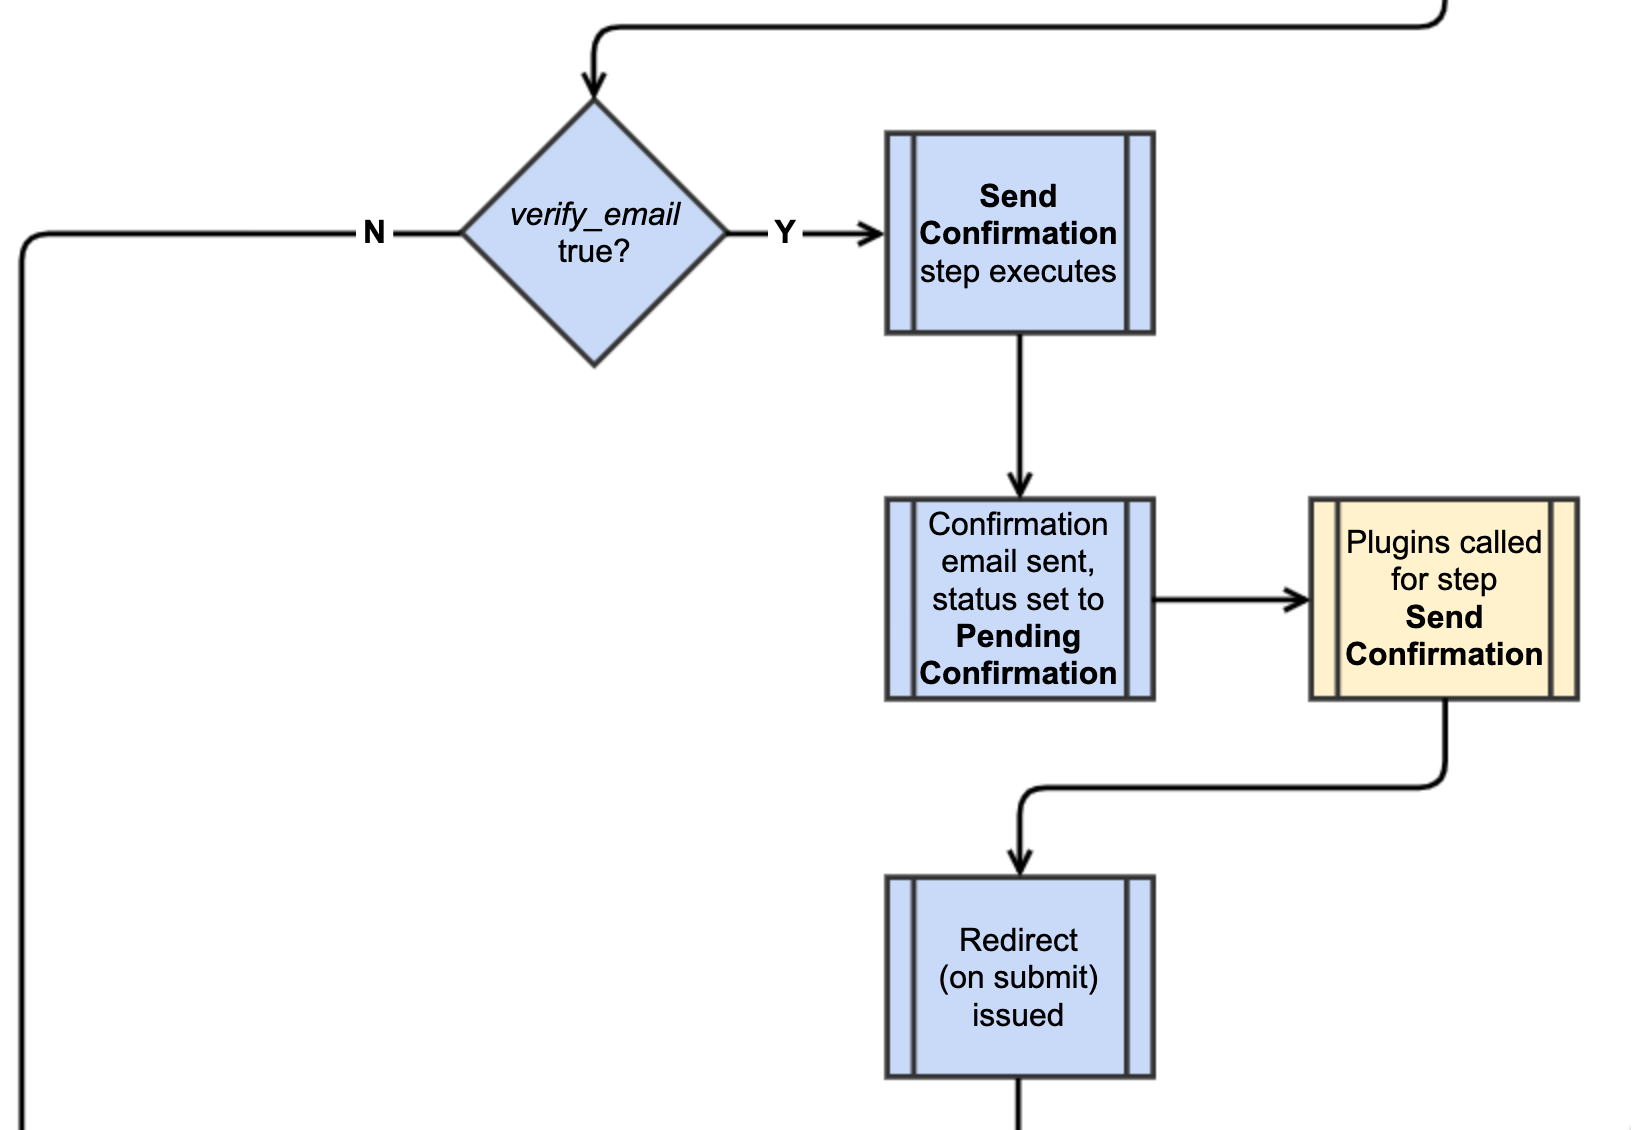 Step 5. Send Confirmation Flow diagram